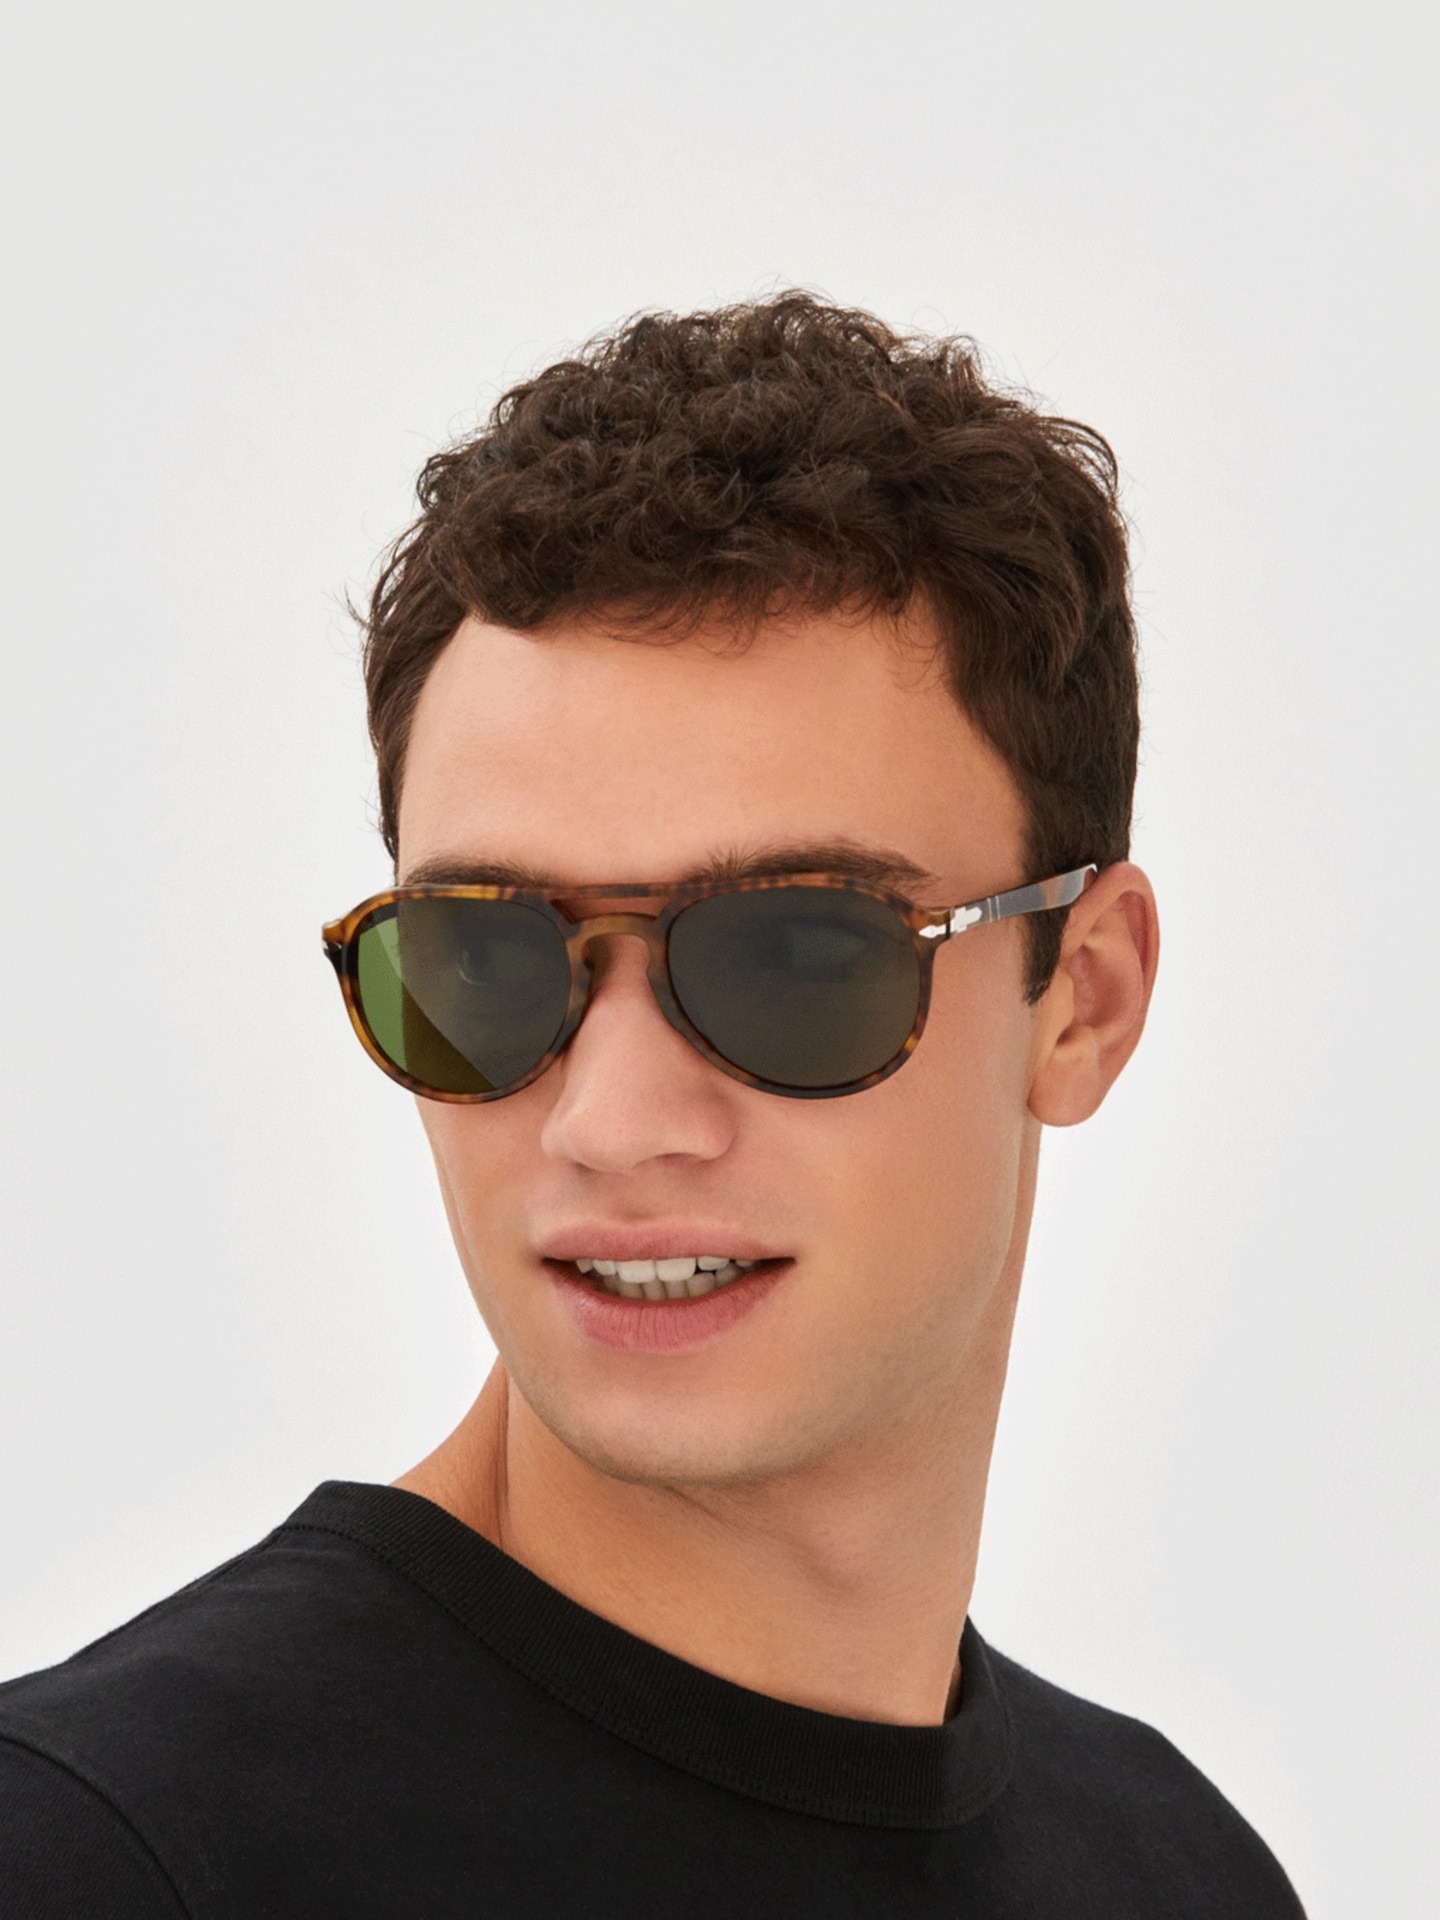 Nauwkeurigheid Zo snel als een flits Bekwaam Persol Caffe' Sunglasses | Glasses.com® | Free Shipping